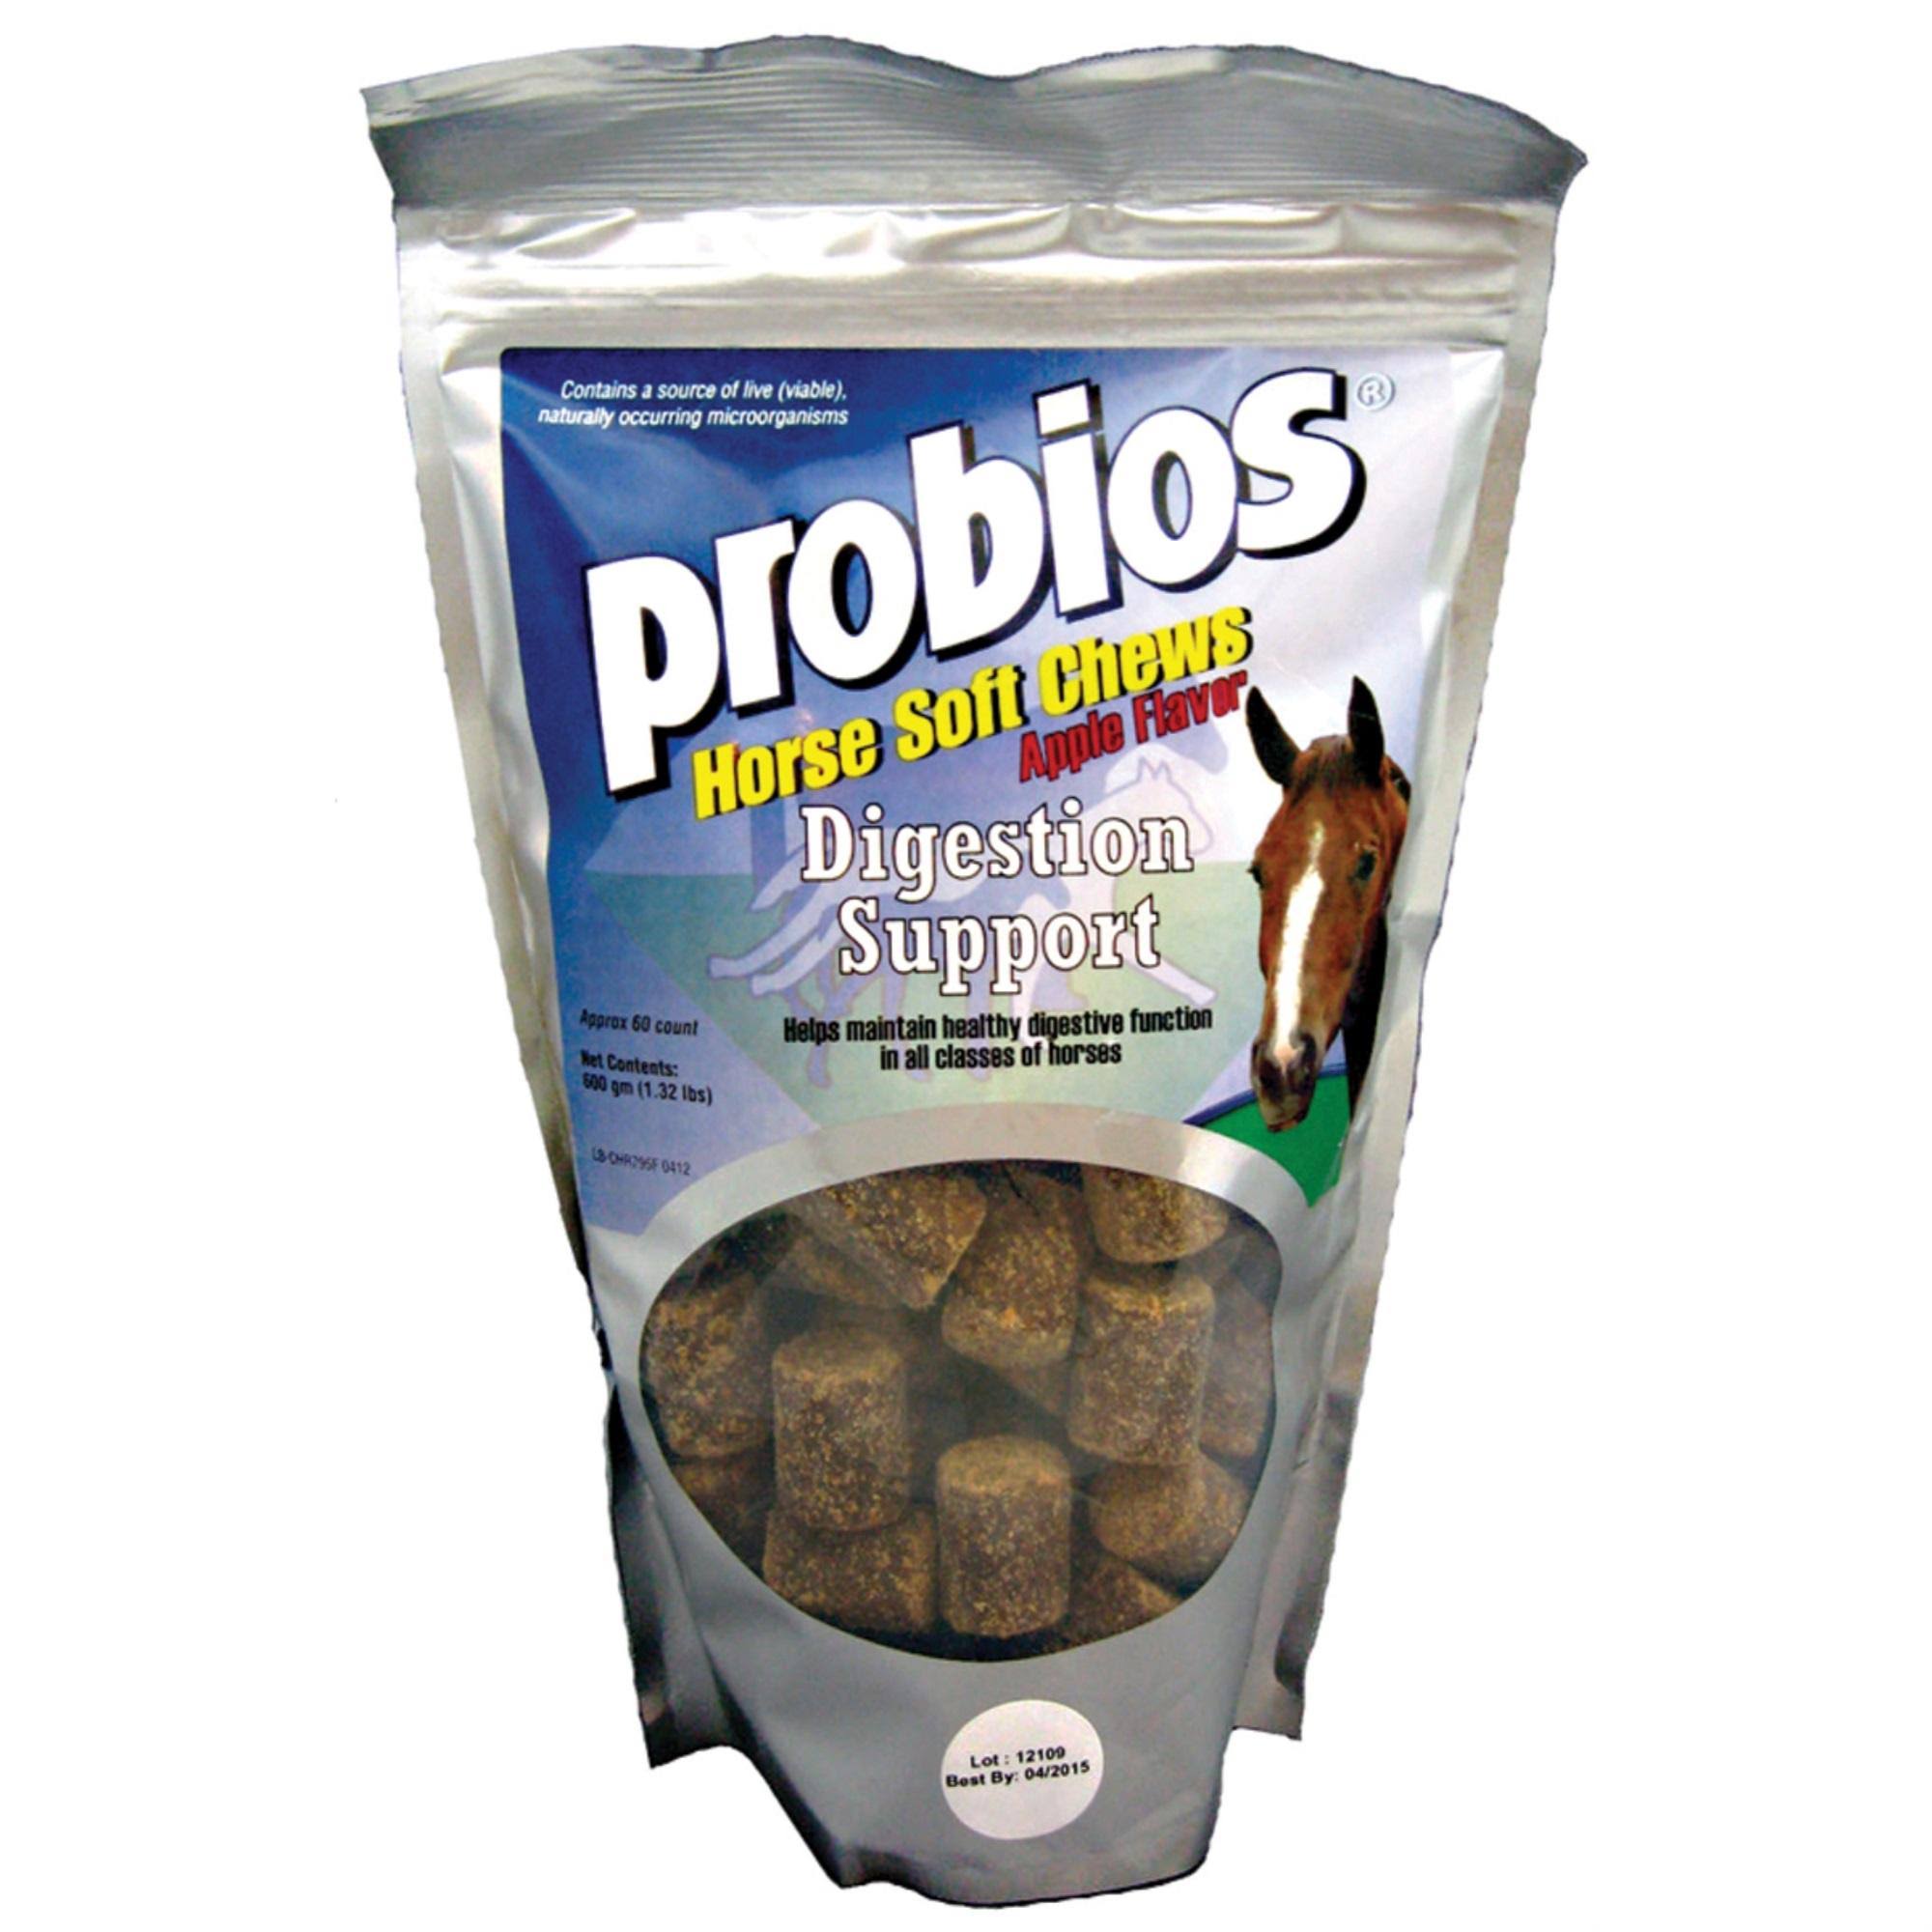 Probios Horse Soft Chews Digestion Support - Apple flavor, 600g